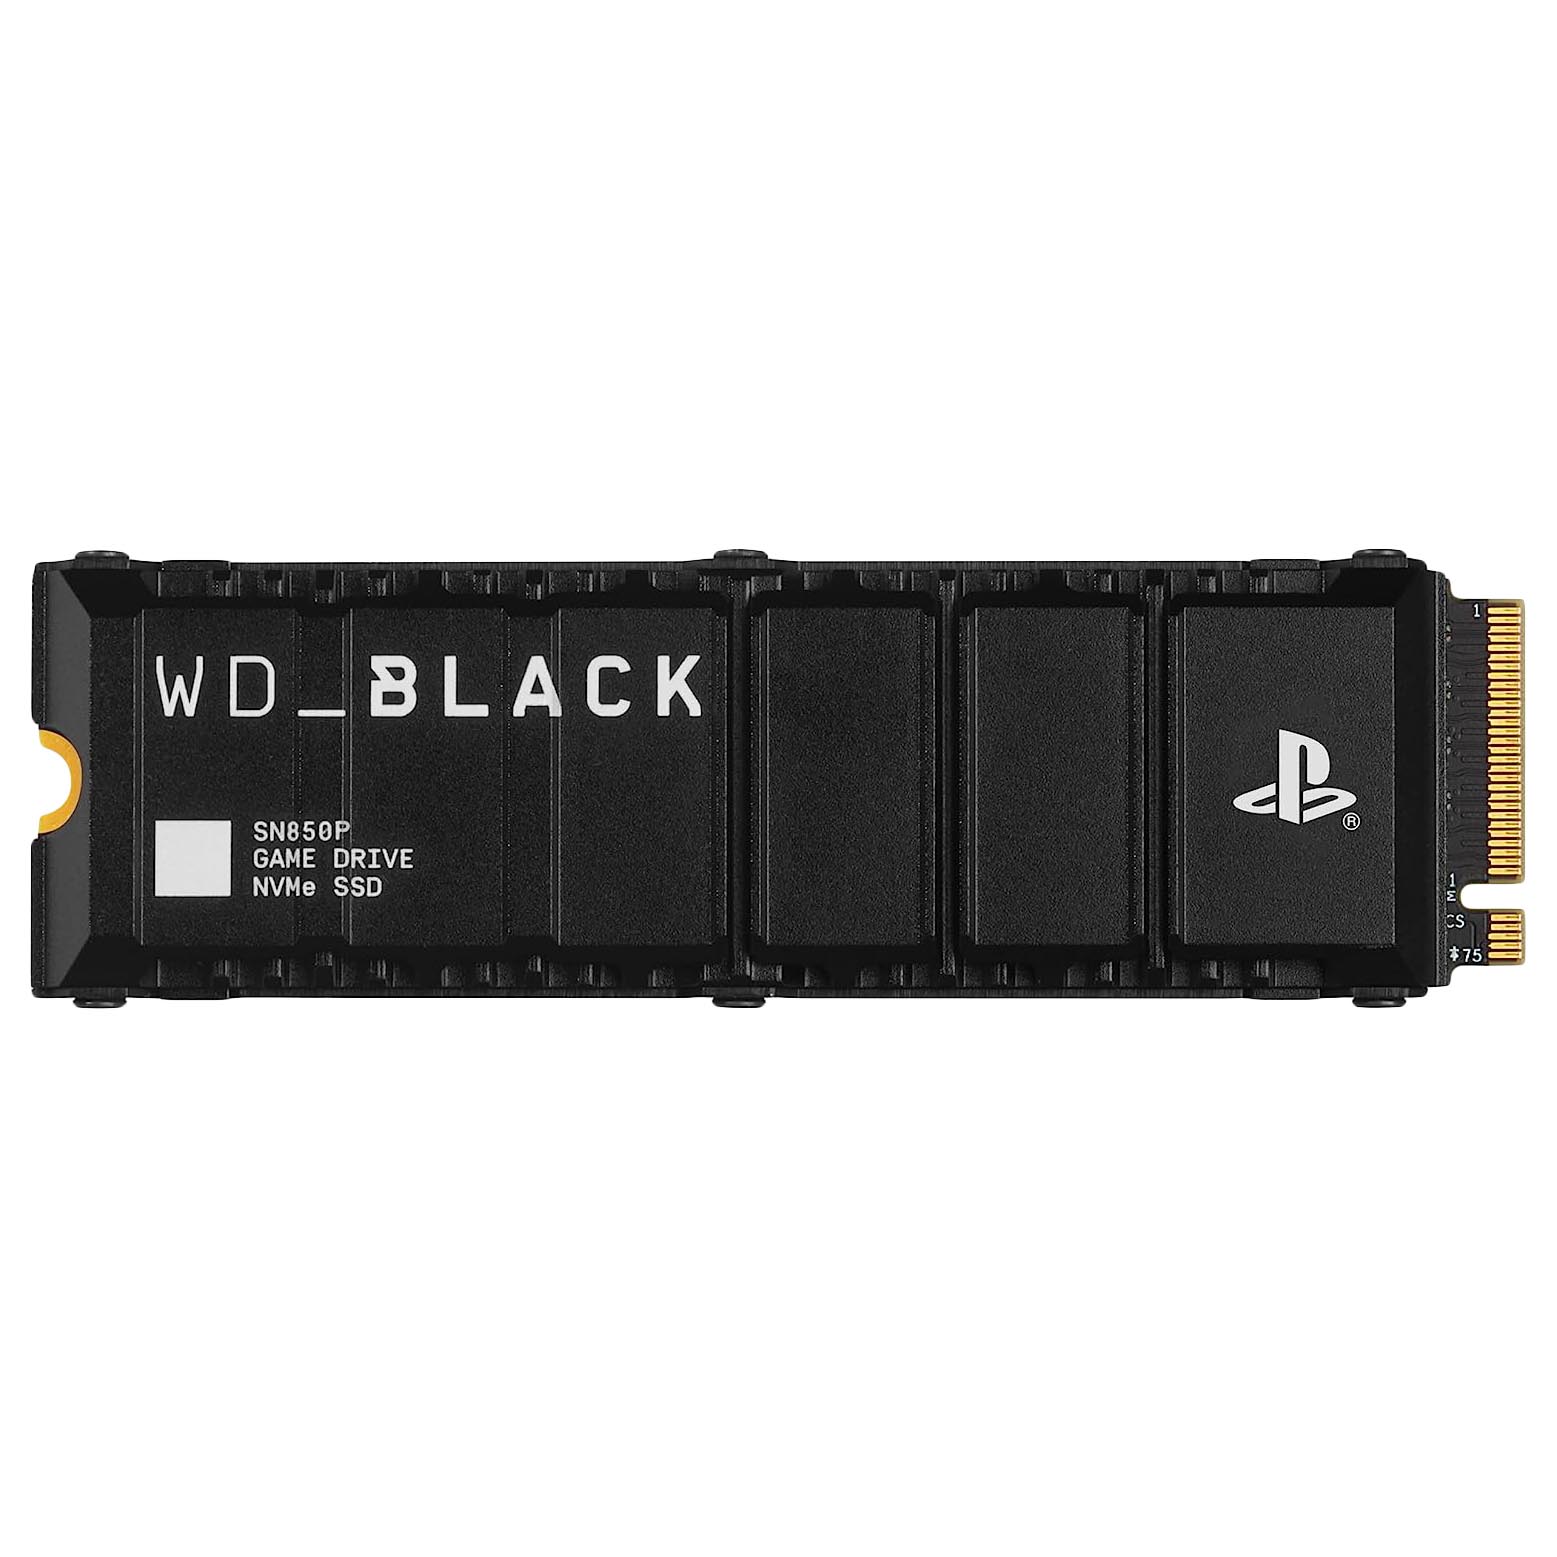 Внутренний твердотельный накопитель Western Digital WD Black SN850P PS5, WDBBYV0020BNC-CRSN, 2Тб, M.2 2280 адаптер playstation camera vr для ps5